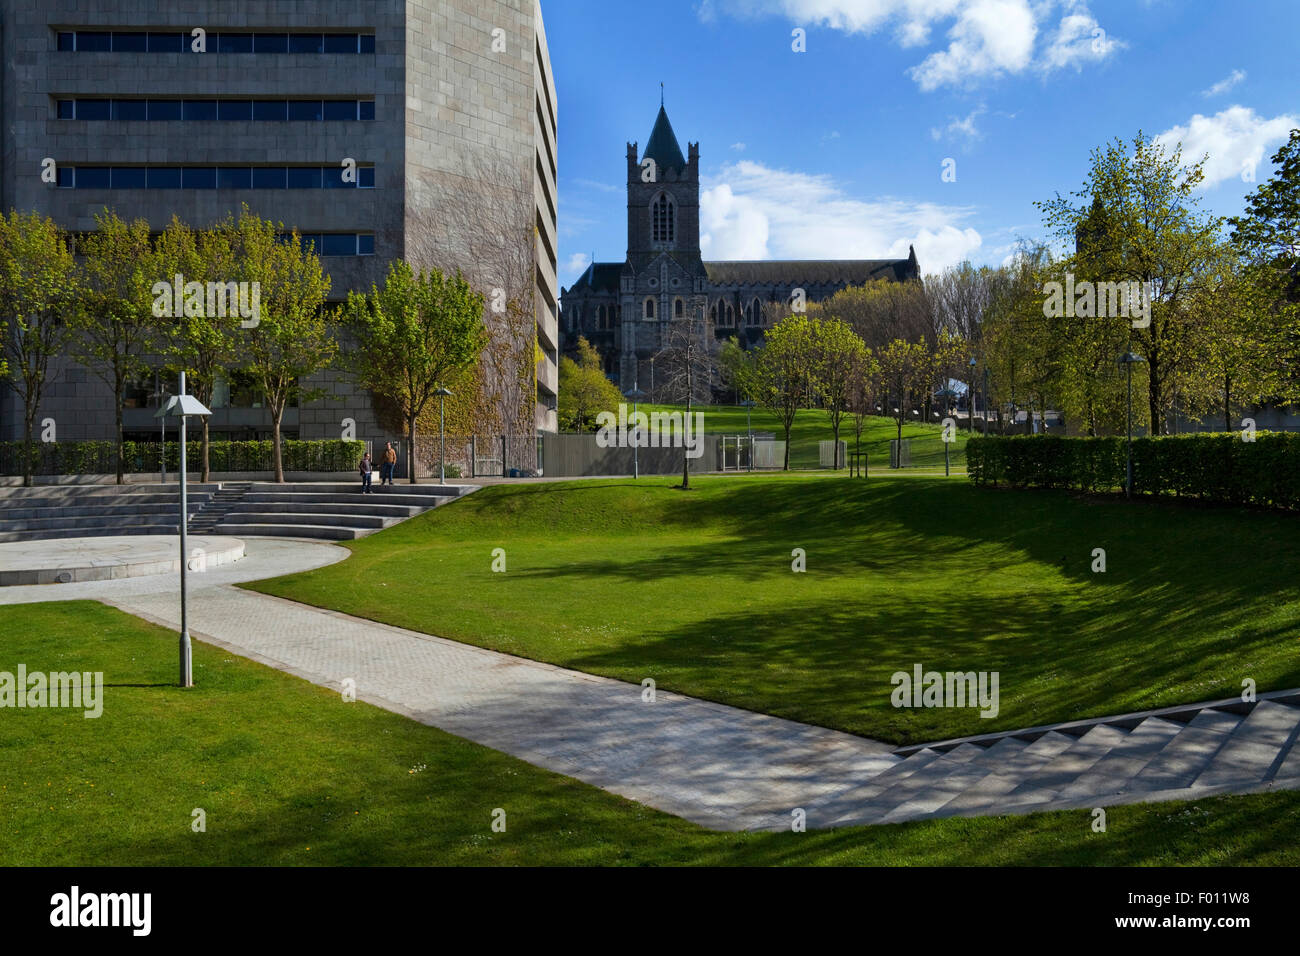 Der Park hinter Dublin Korporation Civic Offices auf Holz Kai. Mit Christ Church Cathedral hinter Stadt Dublin, Irland Stockfoto